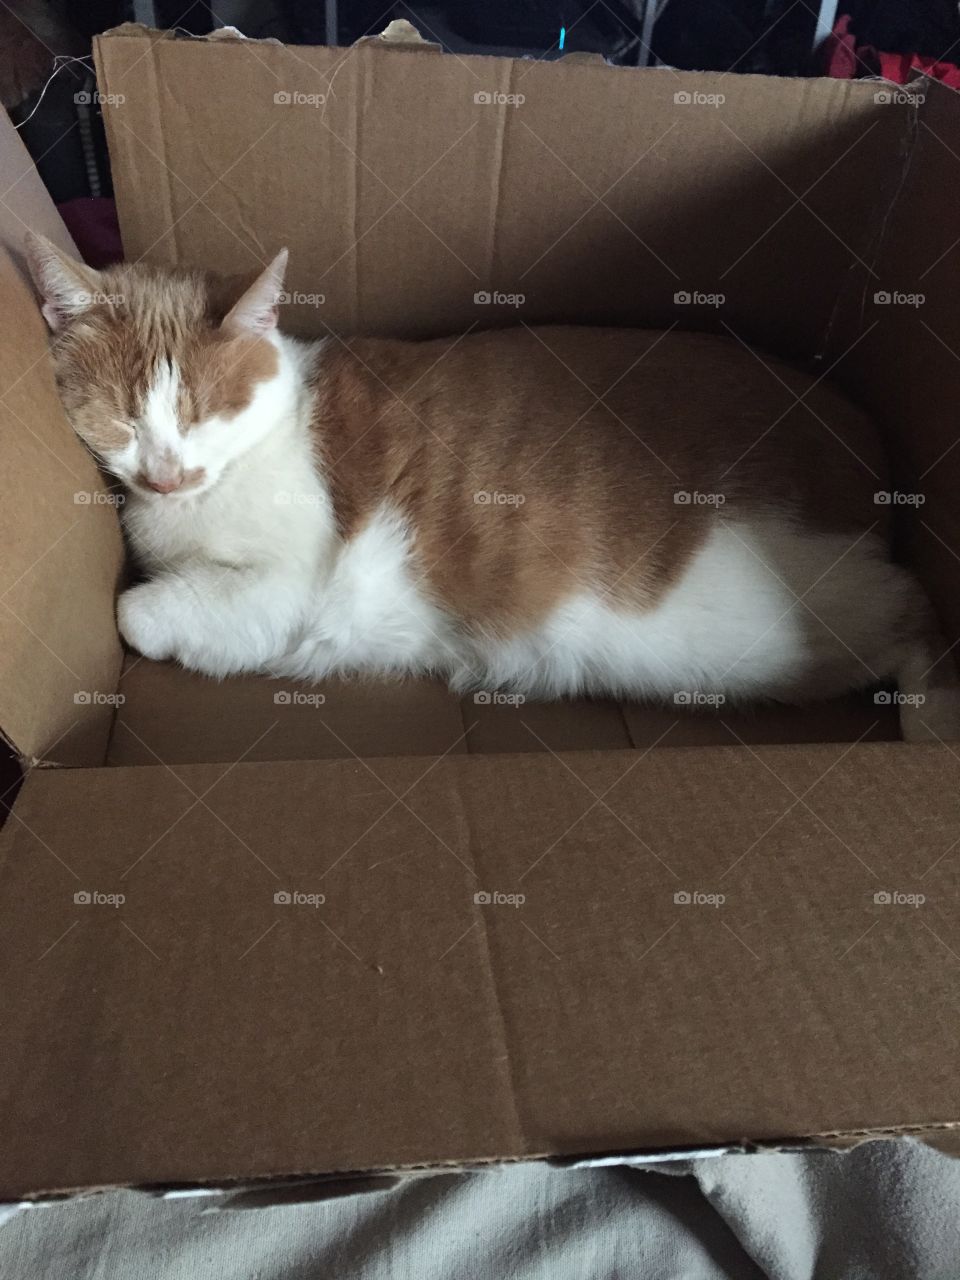 Sleeping cat in box